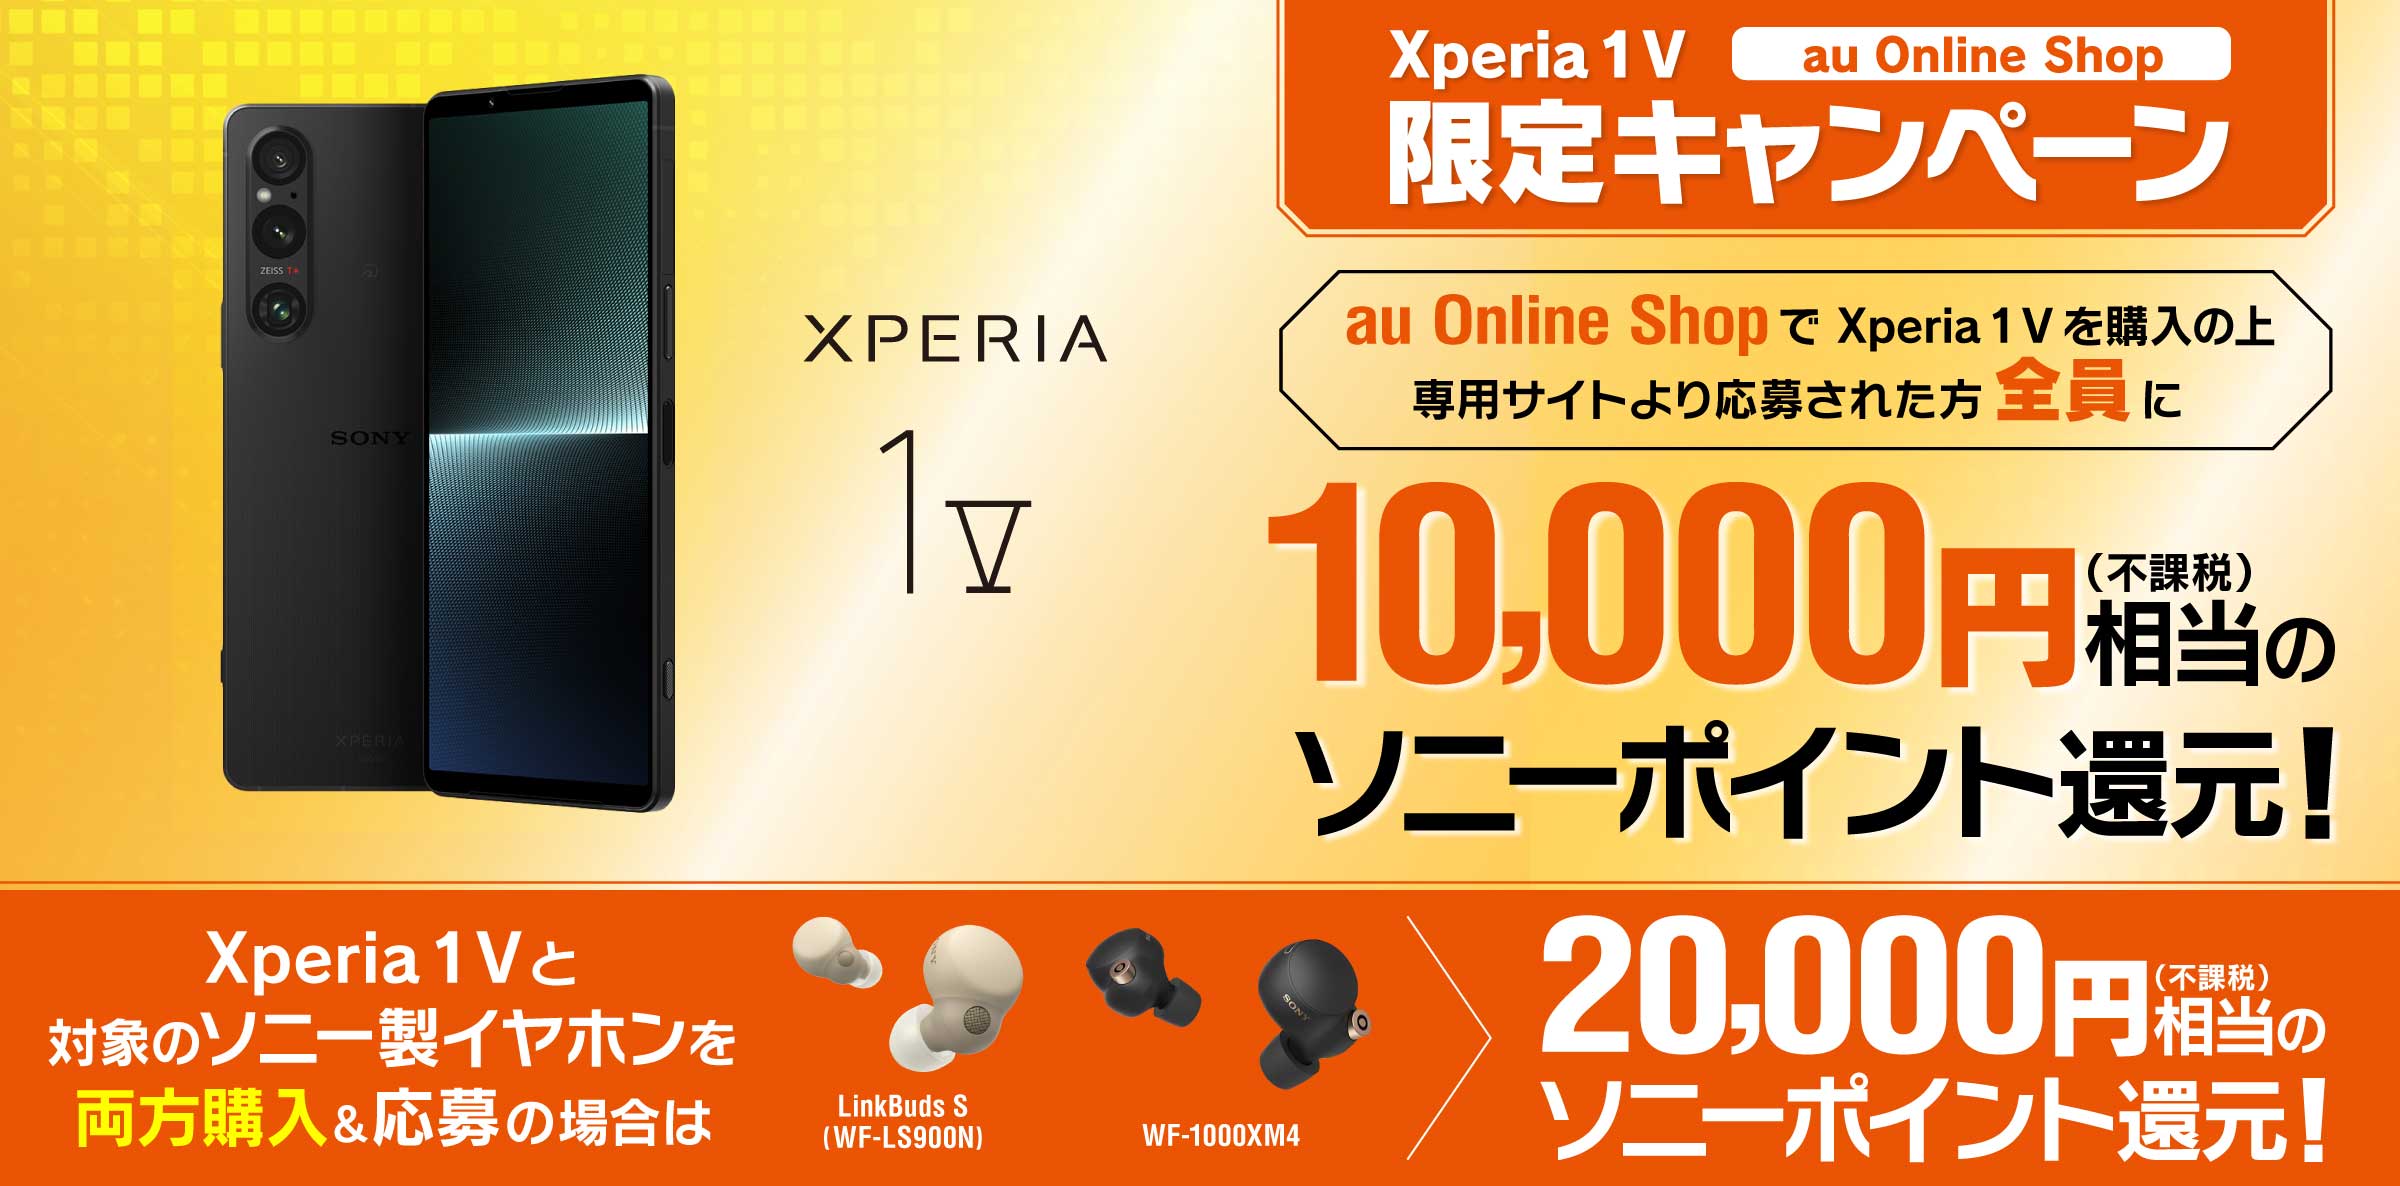 Xperia 1 V au Online Shop 限定キャンペーン au Online Shopで Xperia 1 V を購入の上、専用サイトより応募された方全員に10,000円(不課税)相当のソニーポイント還元！ Xperia 1 V と対象のソニー製イヤホンを両方購入＆応募の場合は 20,000円相当(不課税)のソニーポイント還元！ ※別途キャンペーンサイトへアクセスの上ご応募が必要です。